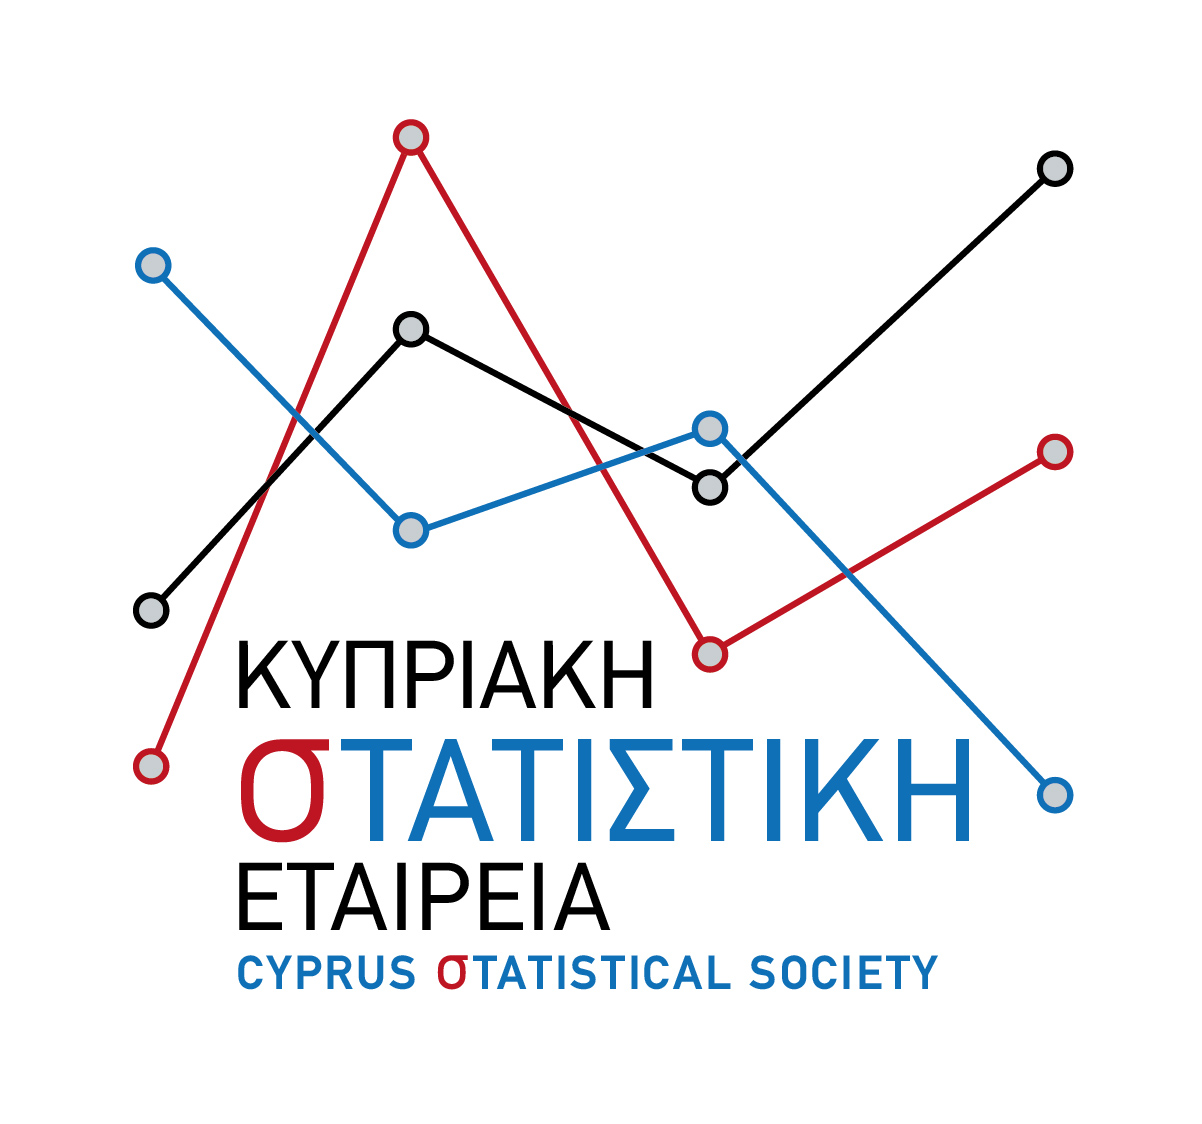 Cyprus Statistical Society